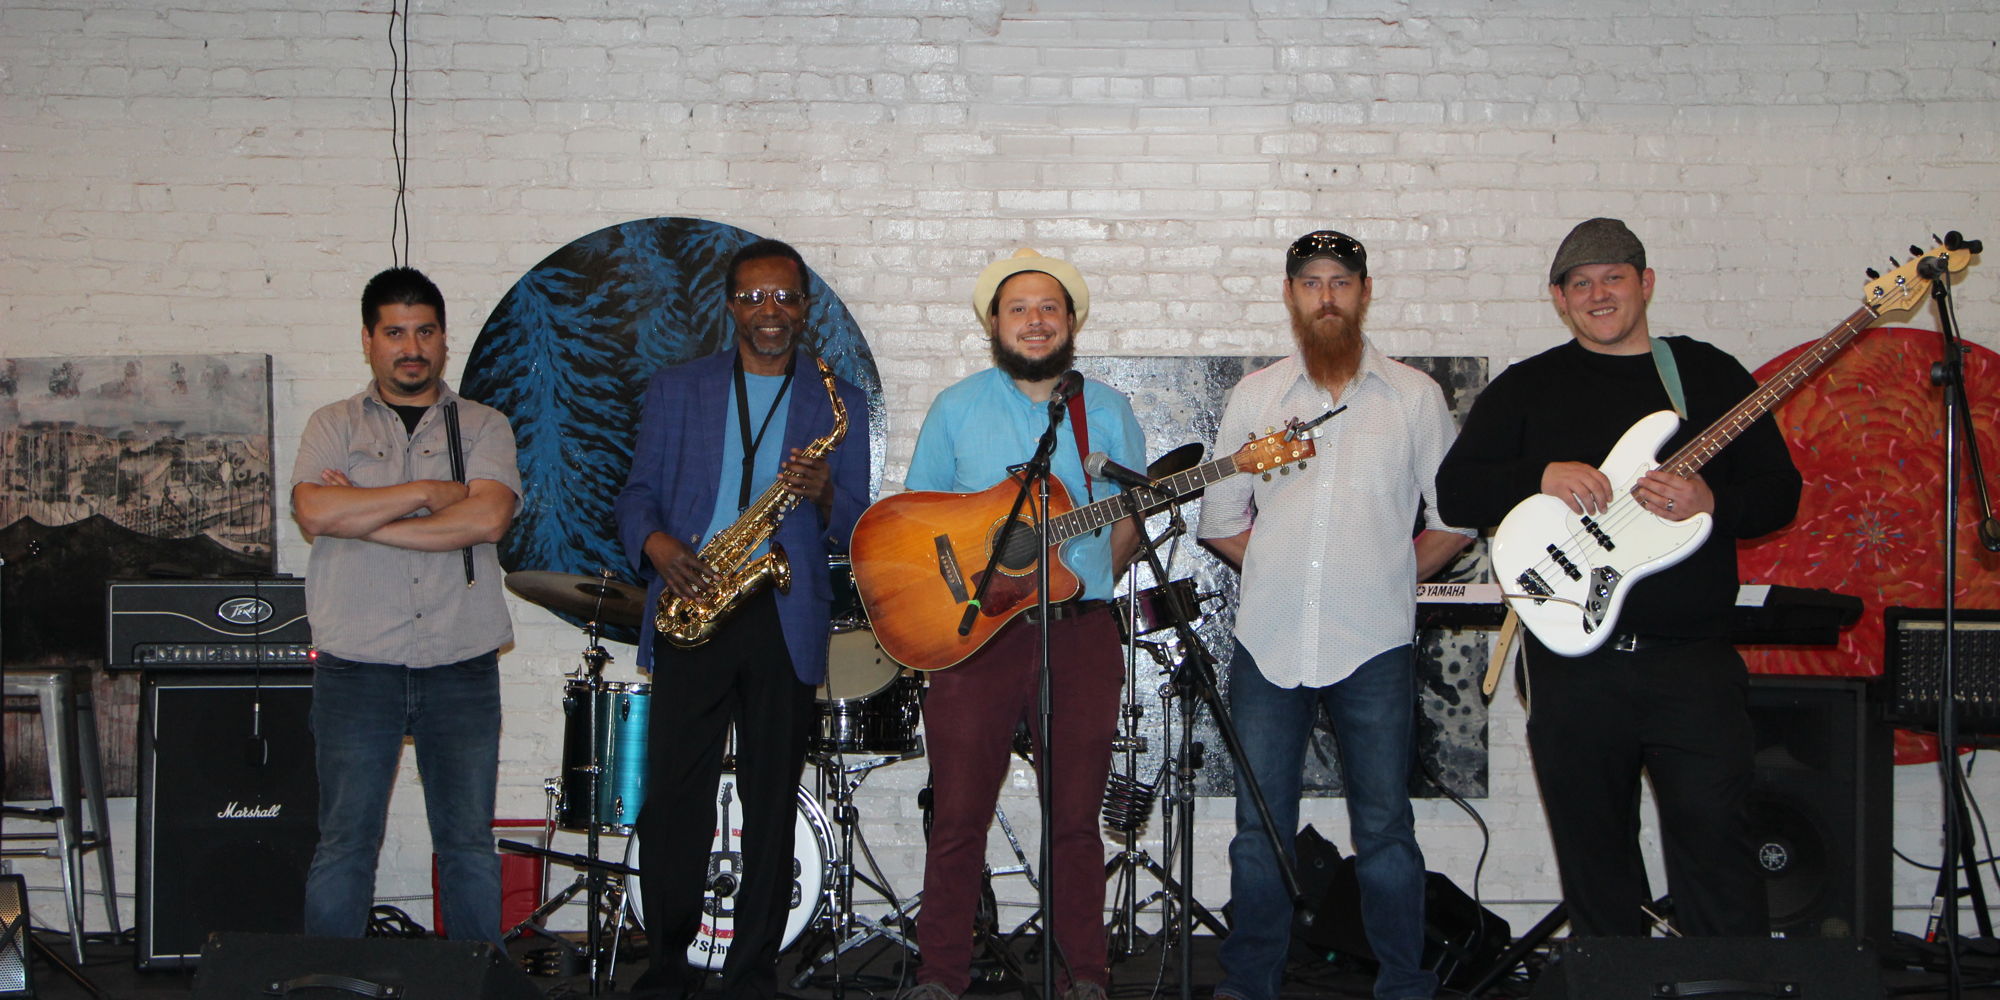 Dan Schutt Band at Strangeways (Dabney Road) promotional image